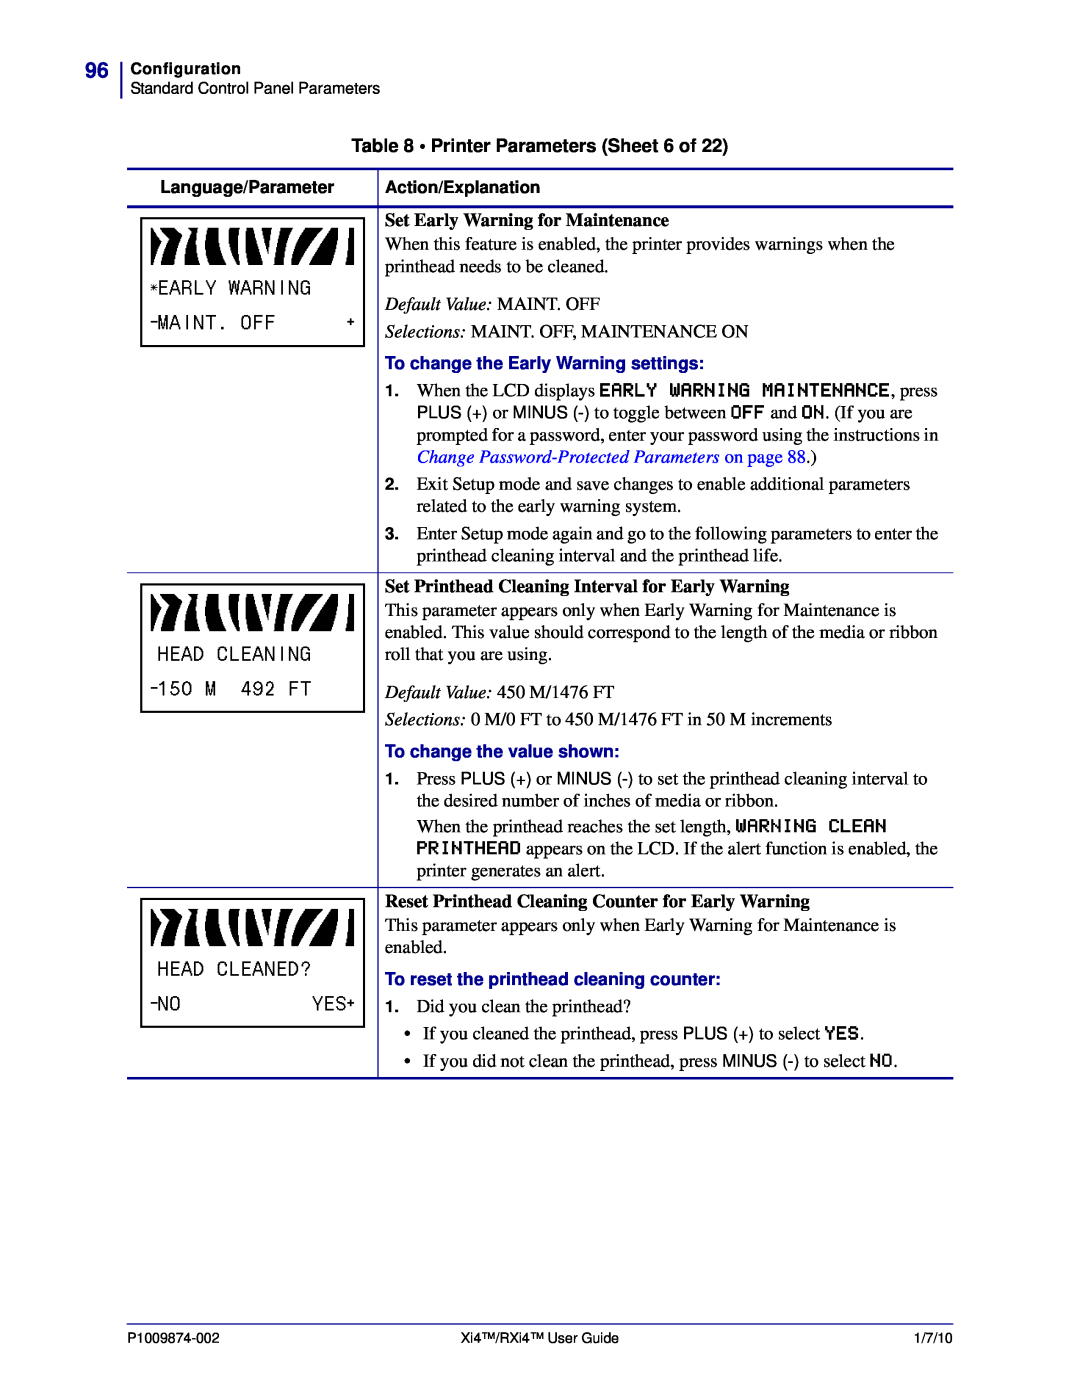 Zebra Technologies 17280100000 Printer Parameters Sheet 6 of, Set Early Warning for Maintenance, Default Value MAINT. OFF 